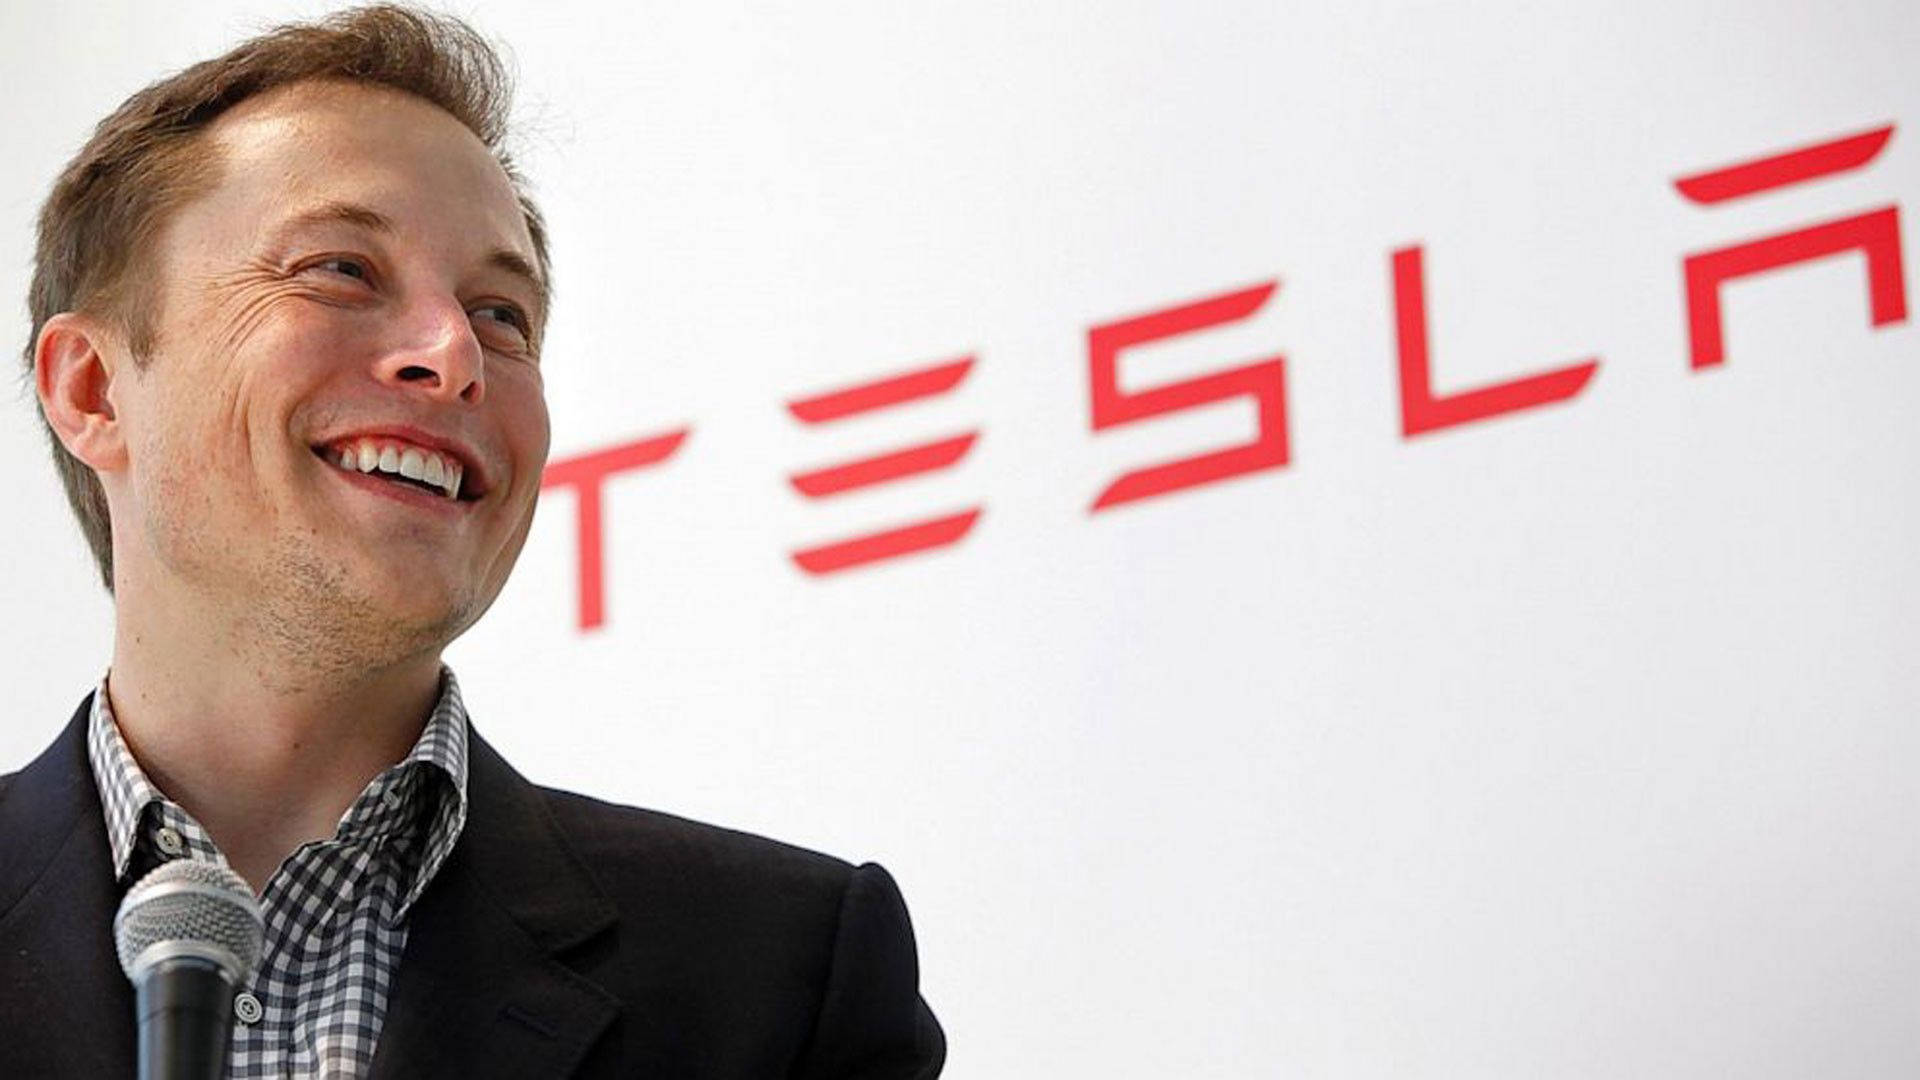 Elon Musk Tesla CEO Wallpaper